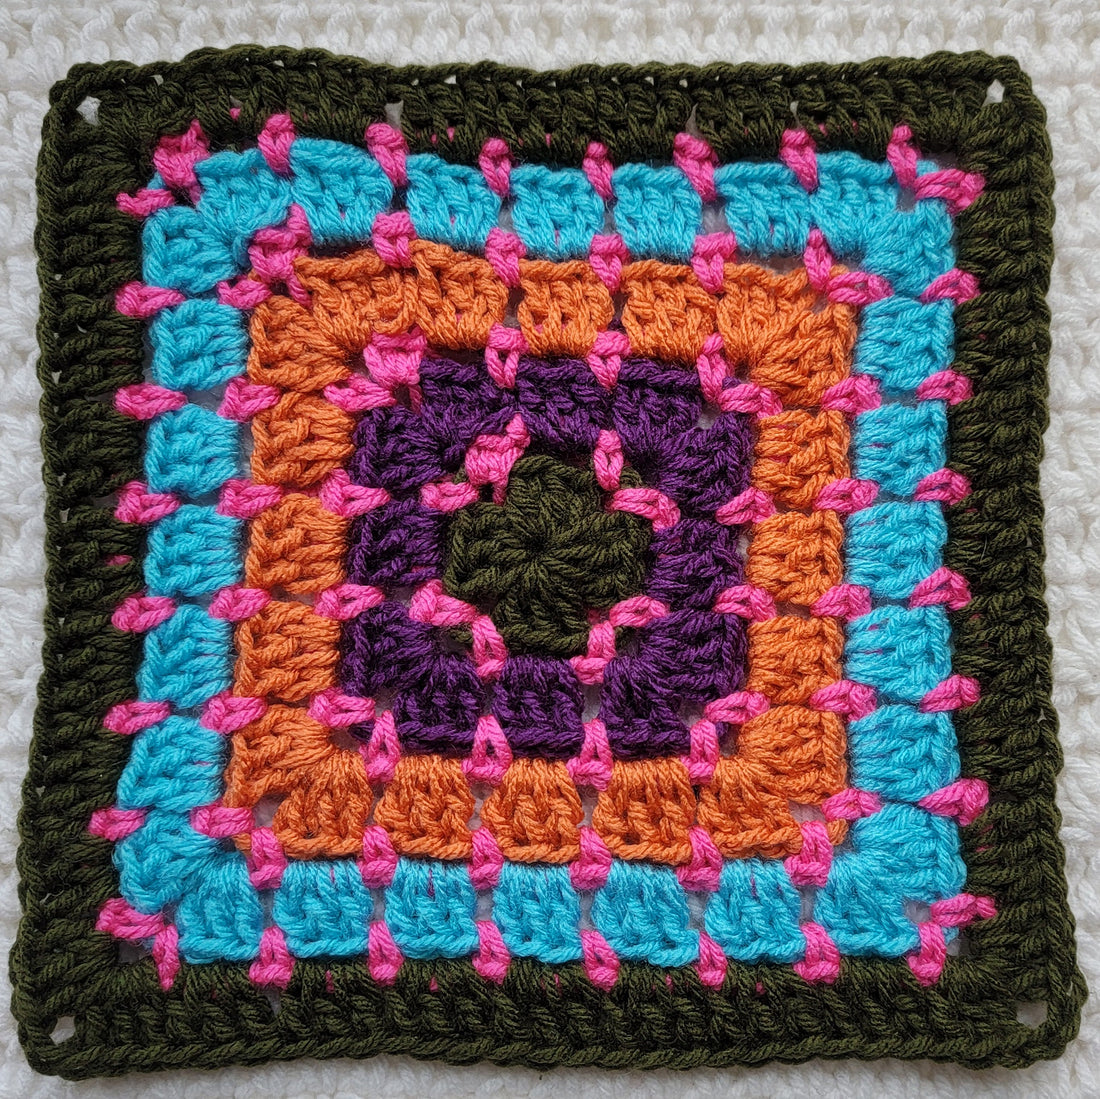 Free Crochet Pattern: Blocked Granny Square Pattern!